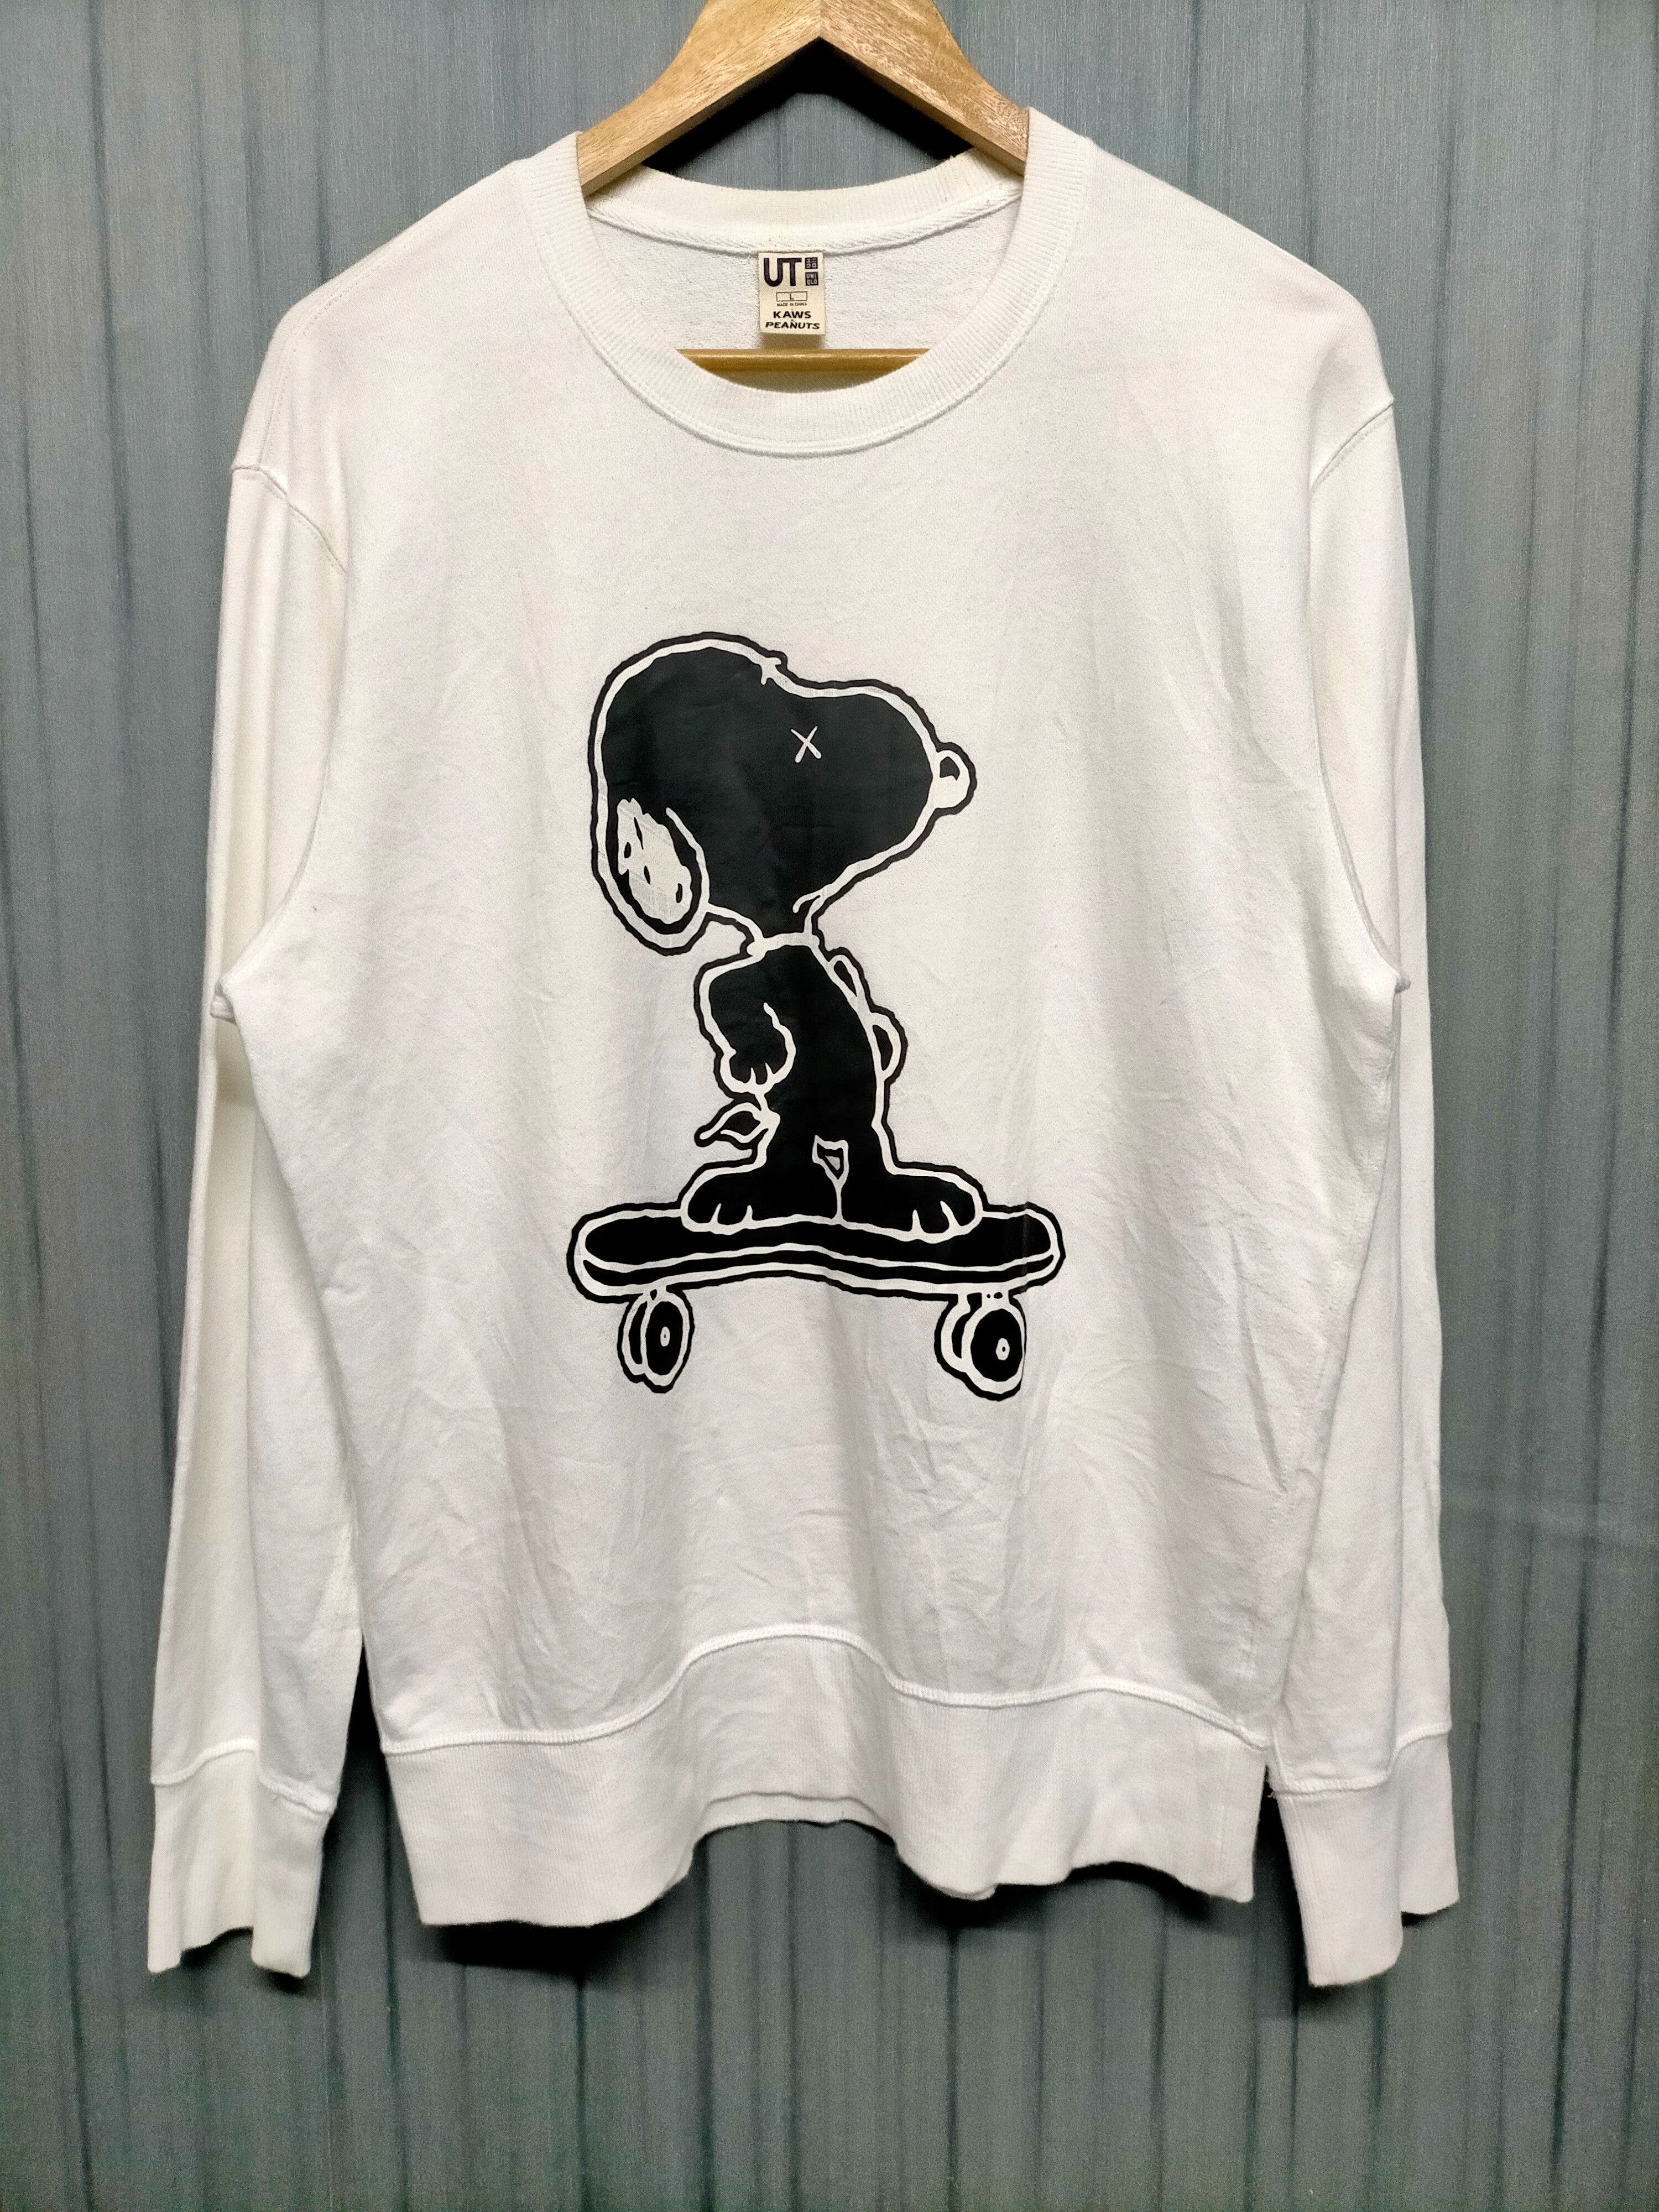 KAWS x Uniqlo x Peanuts Snoopy Skateboarding Sweatshirt (Japanese Sizing) Black